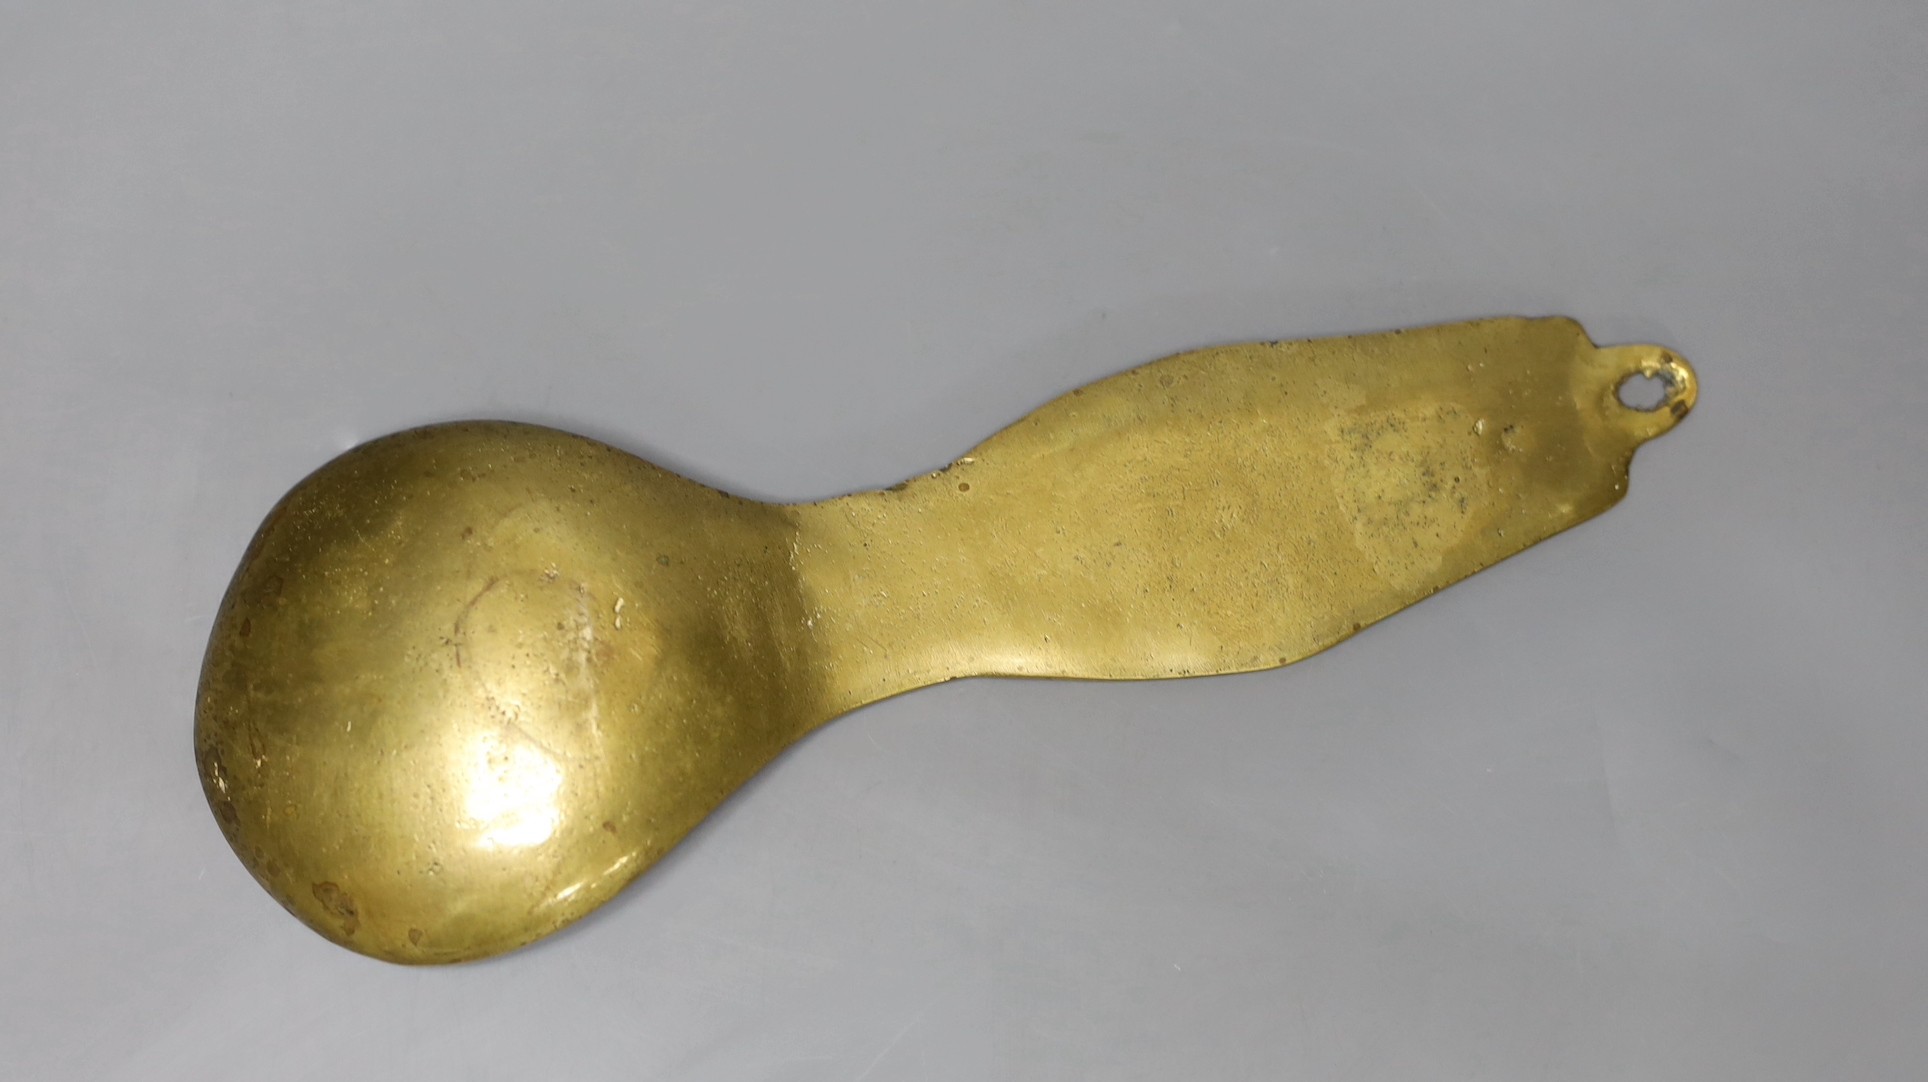 A folk art cast brass ladle, 27cms long